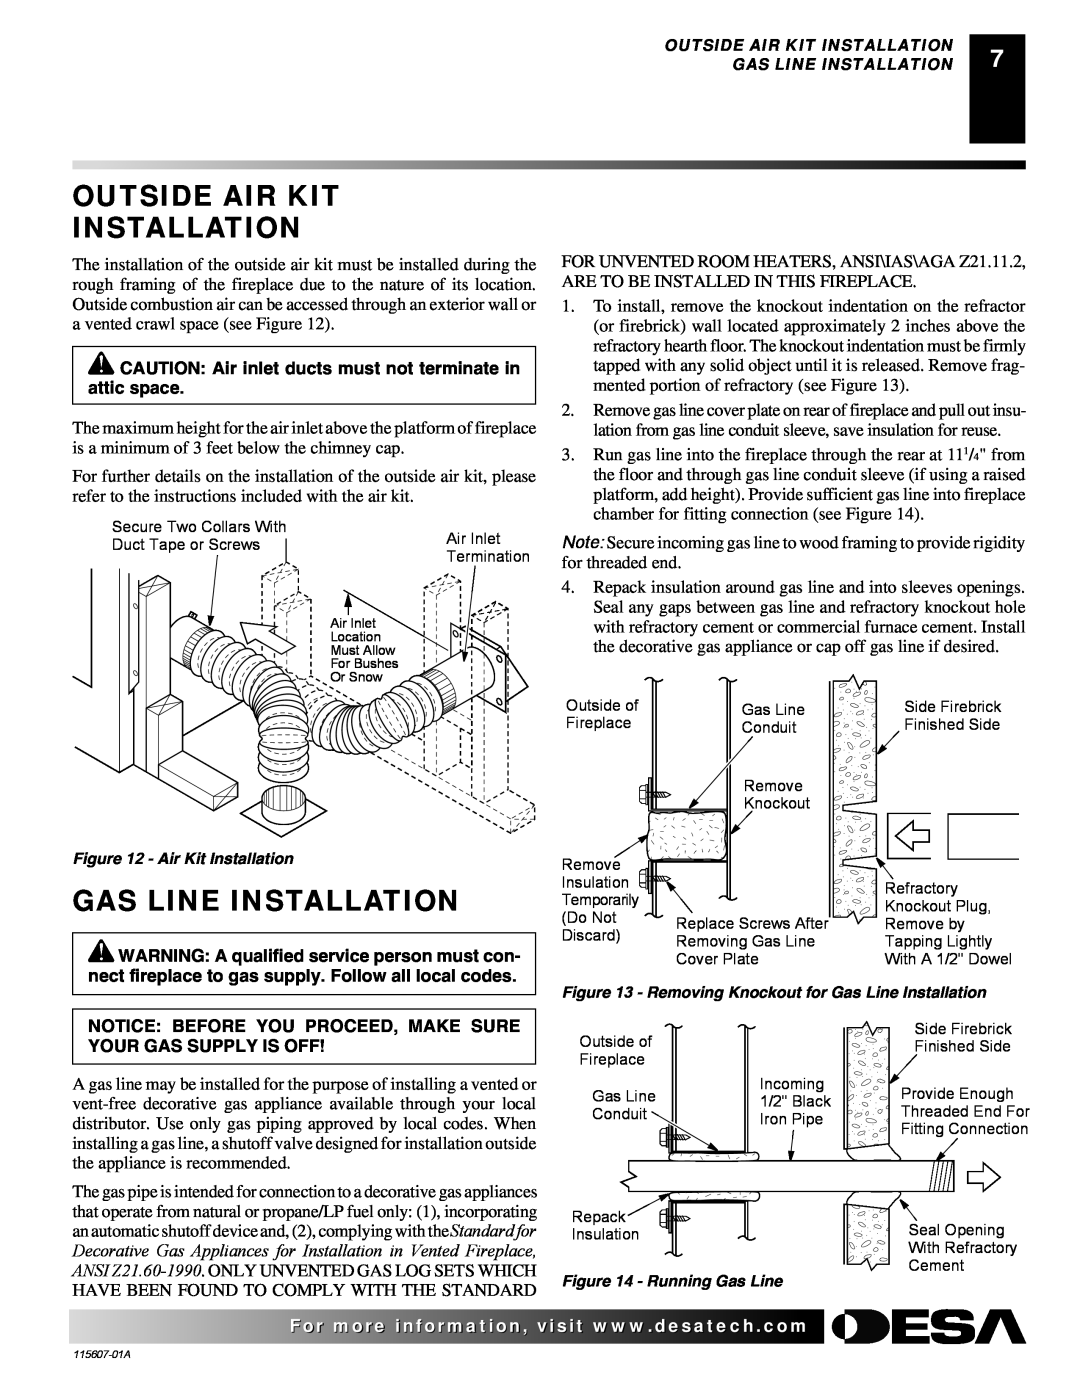 Desa (V)PN36-A manual Outside Air Kit Installation, Gas Line Installation 